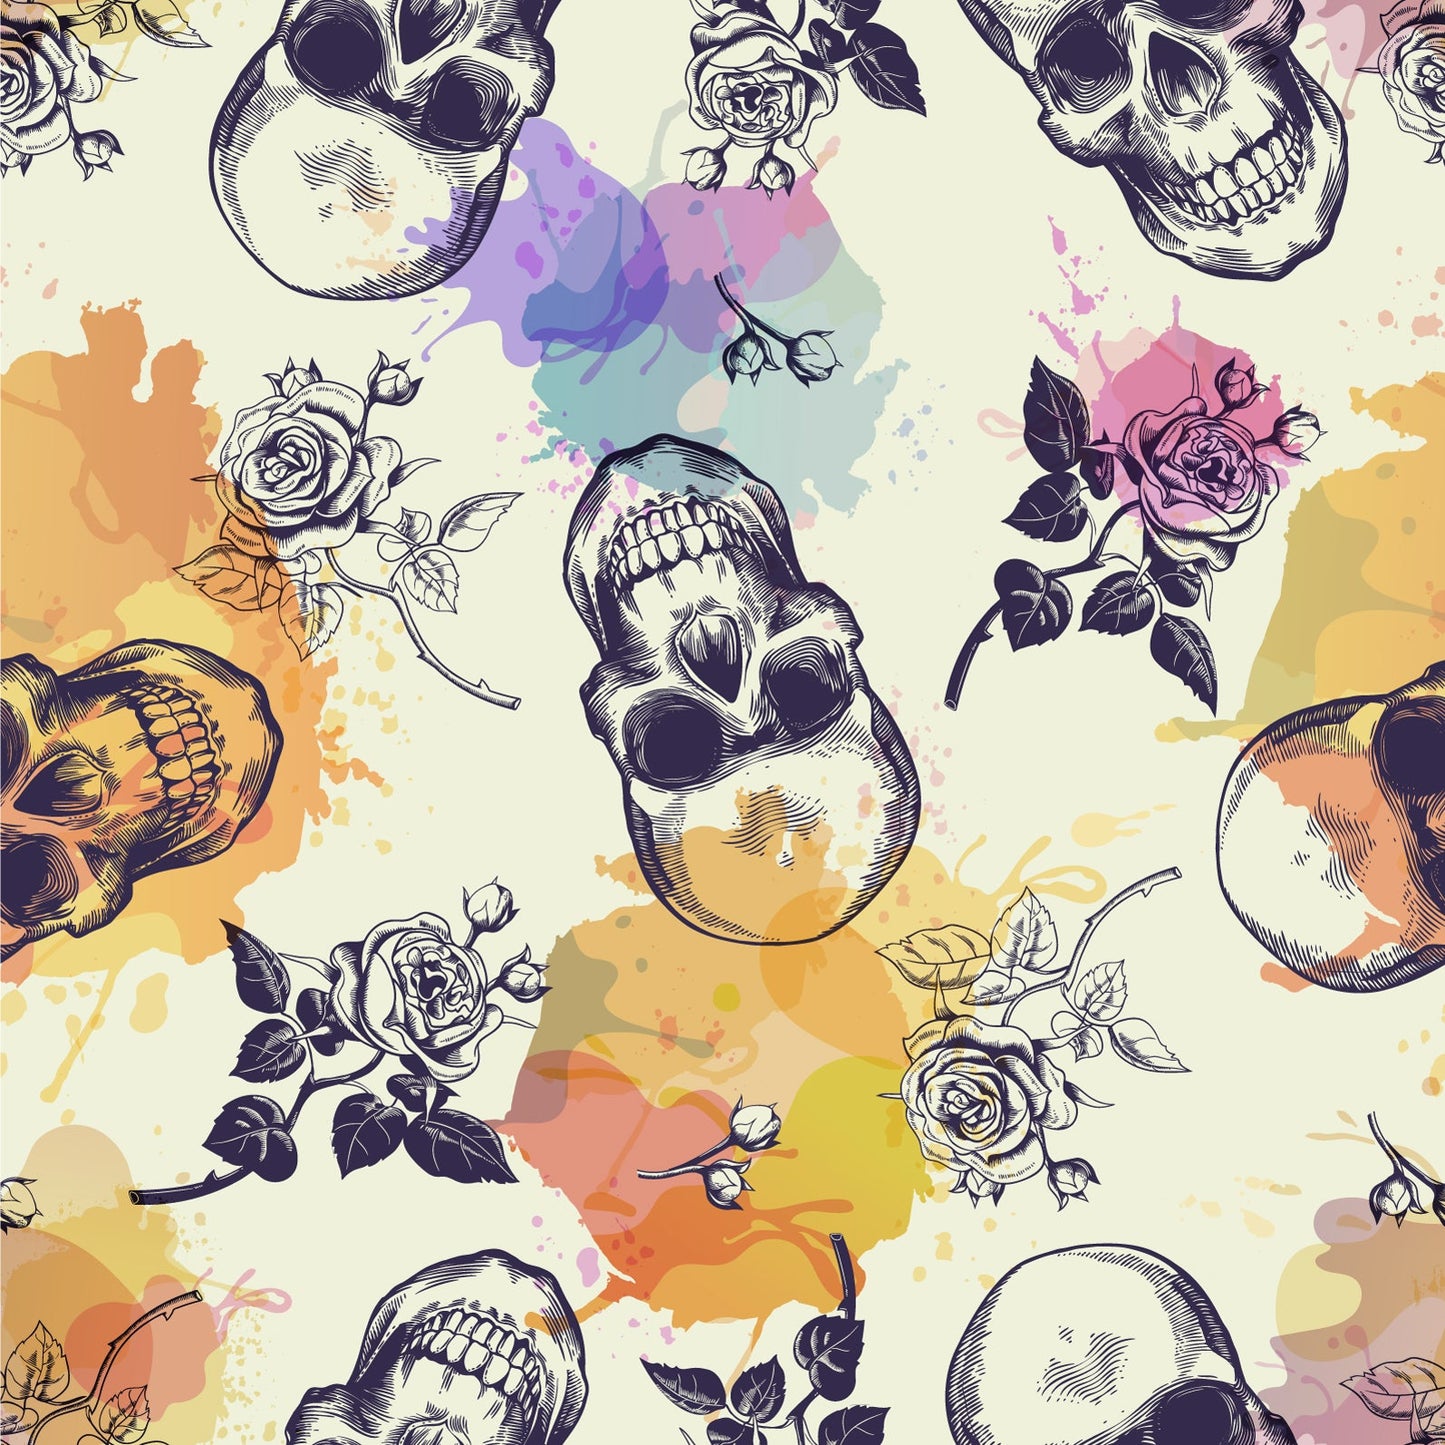 Skulls & Splatters (Tattoo Style) (Adhesive Vinyl - 12" x 12" Printed Sheet)